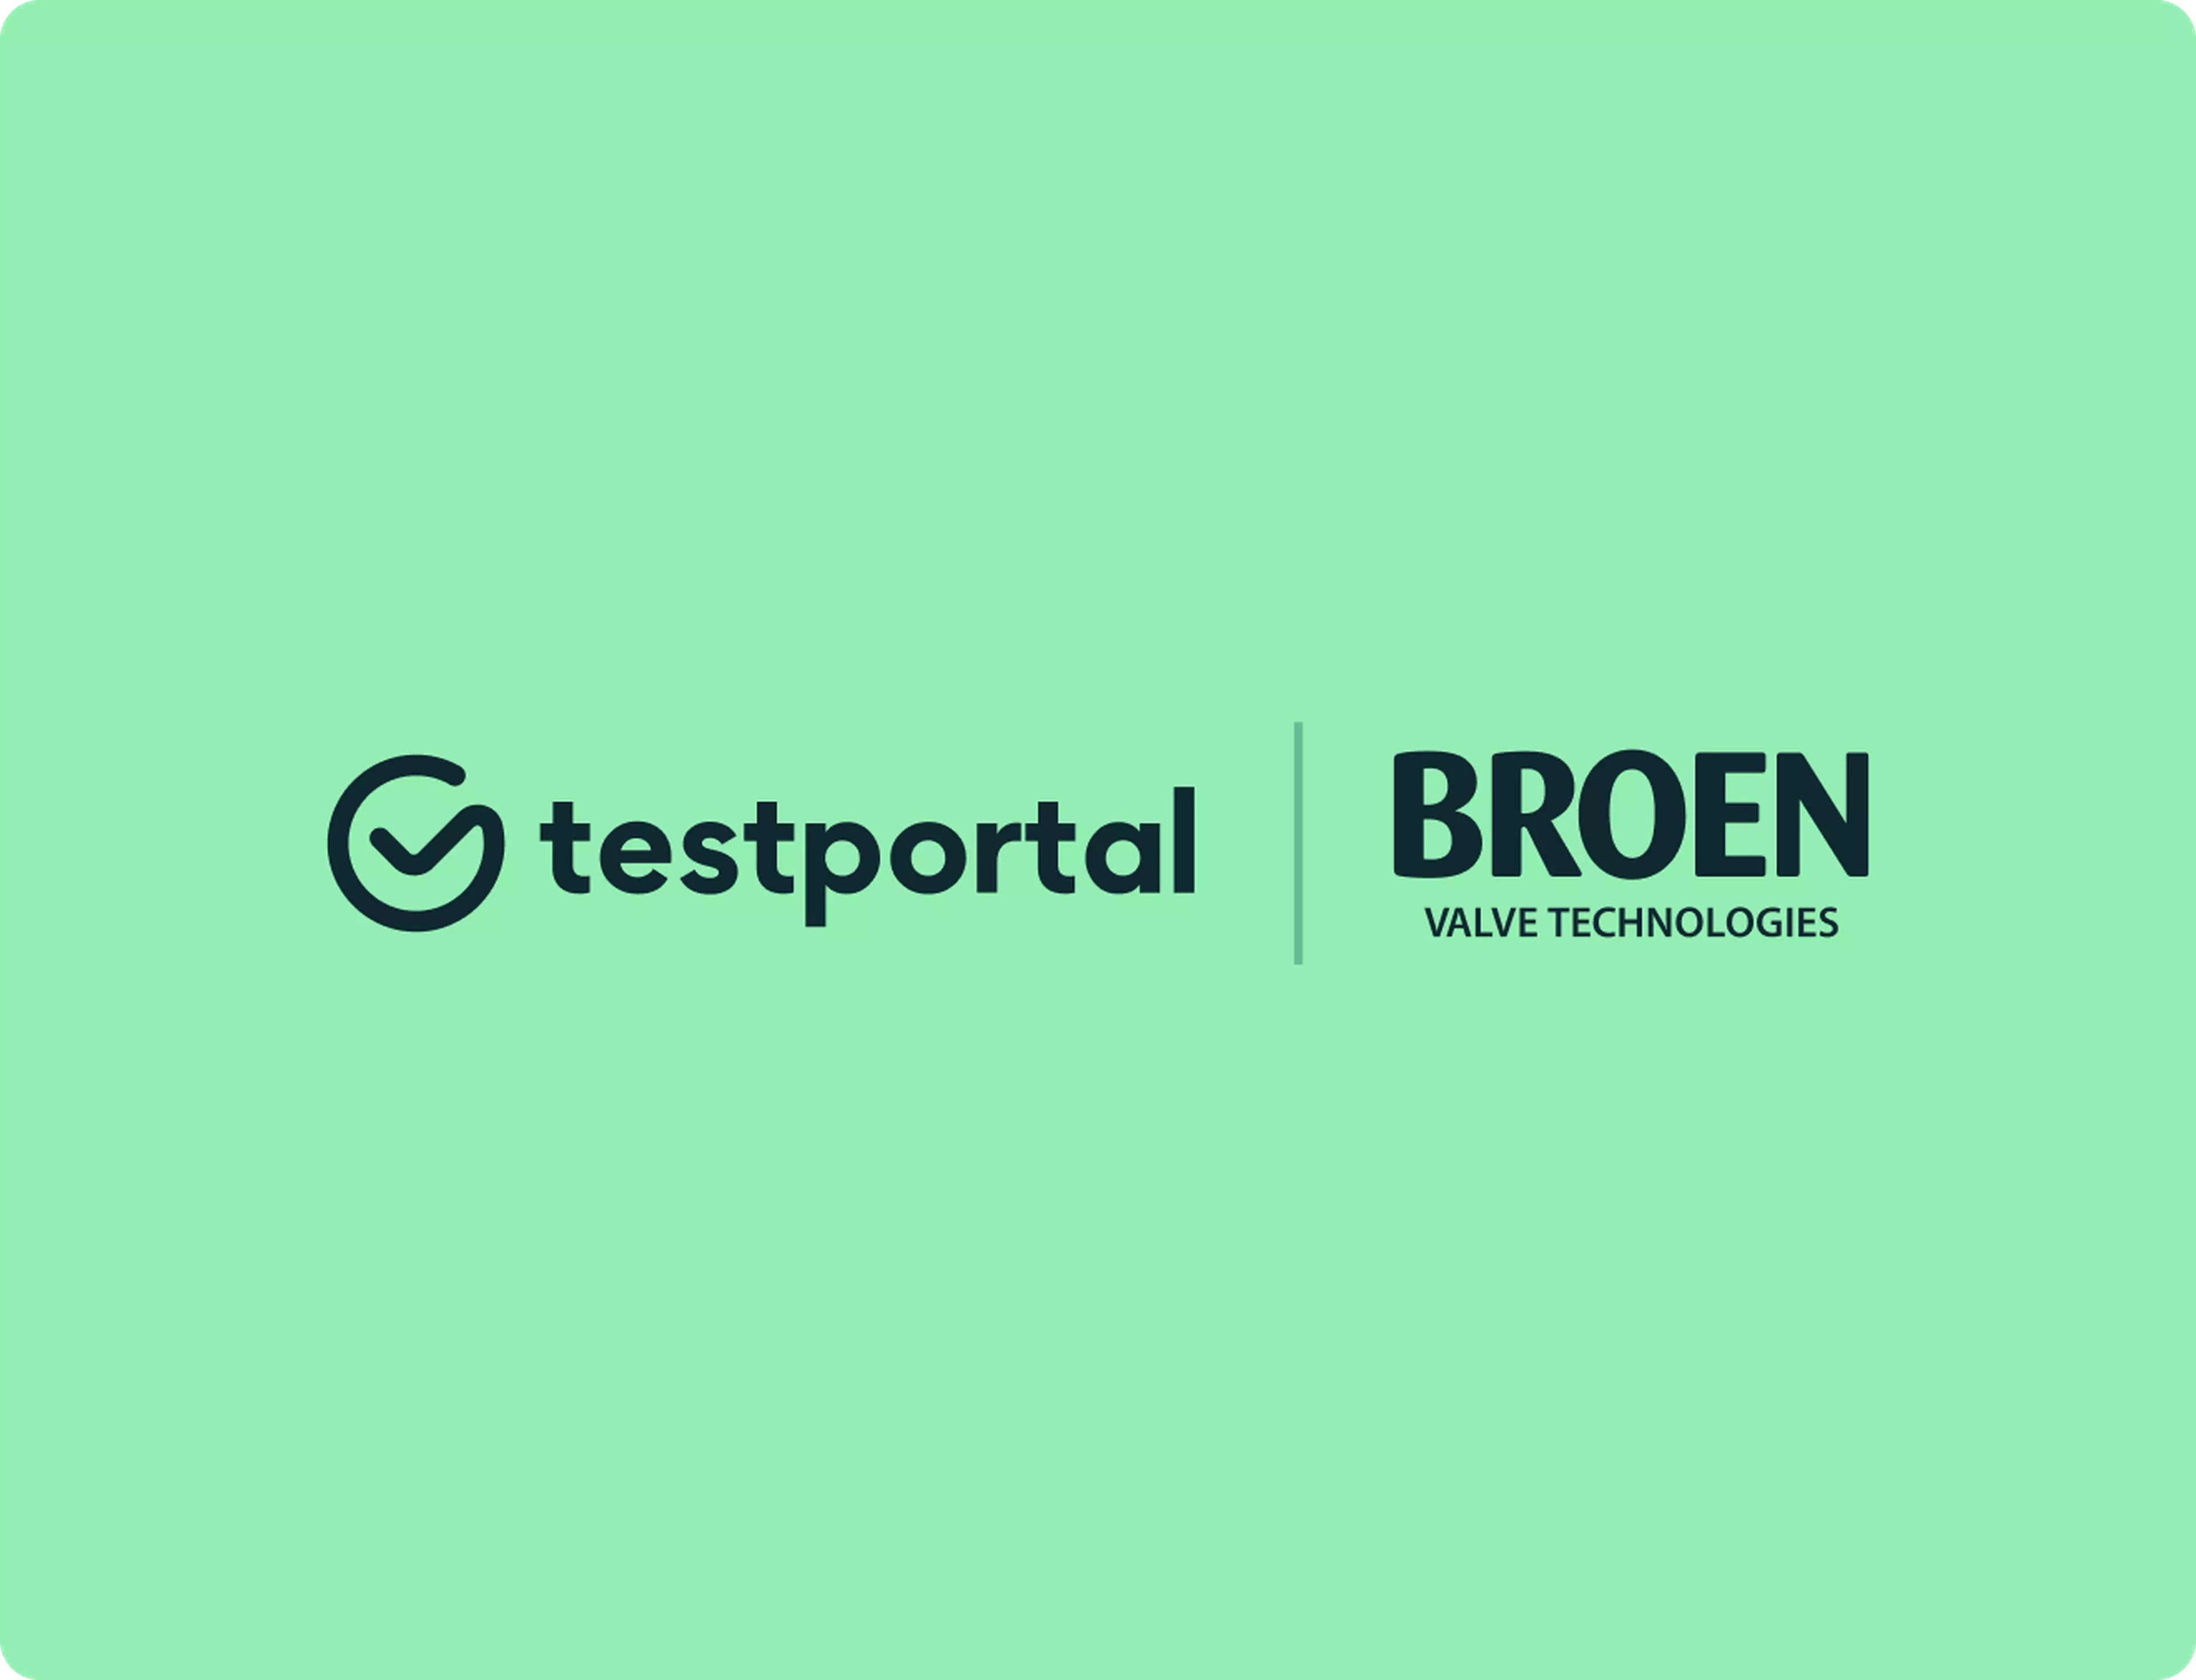 Broen and Testportal logos